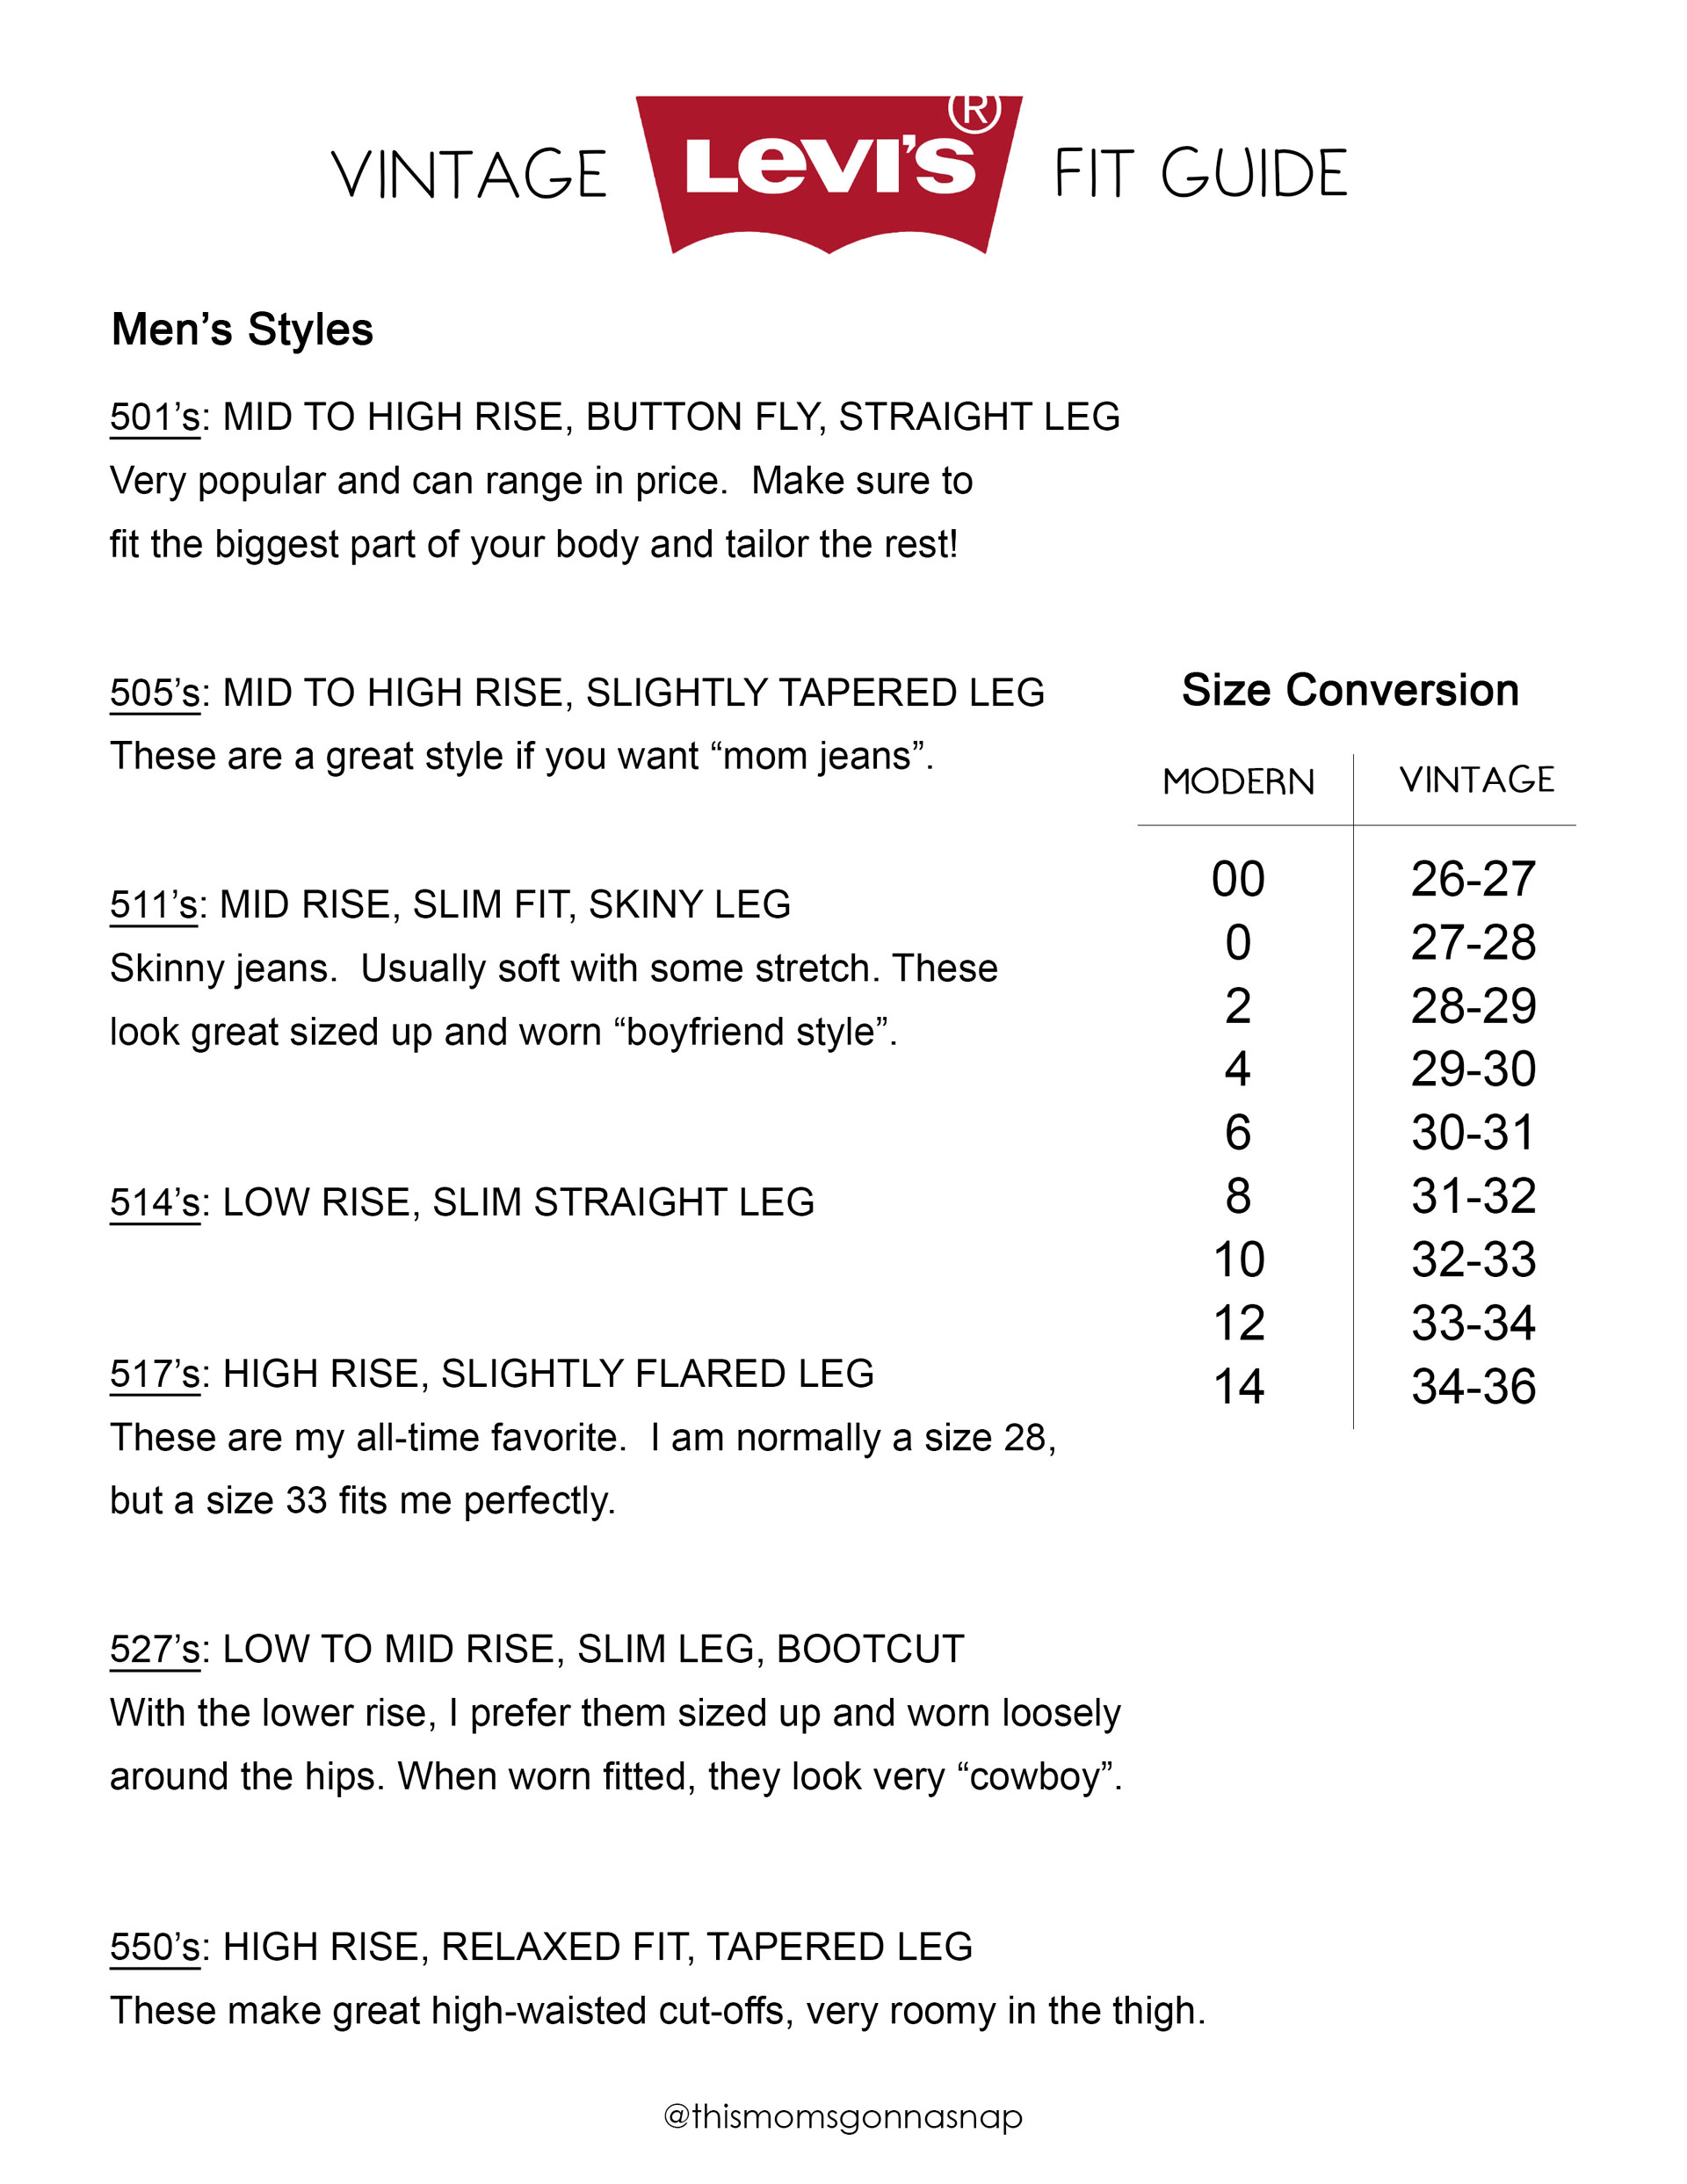 levis womens jeans size 28 conversion,cheap - OFF 63% 